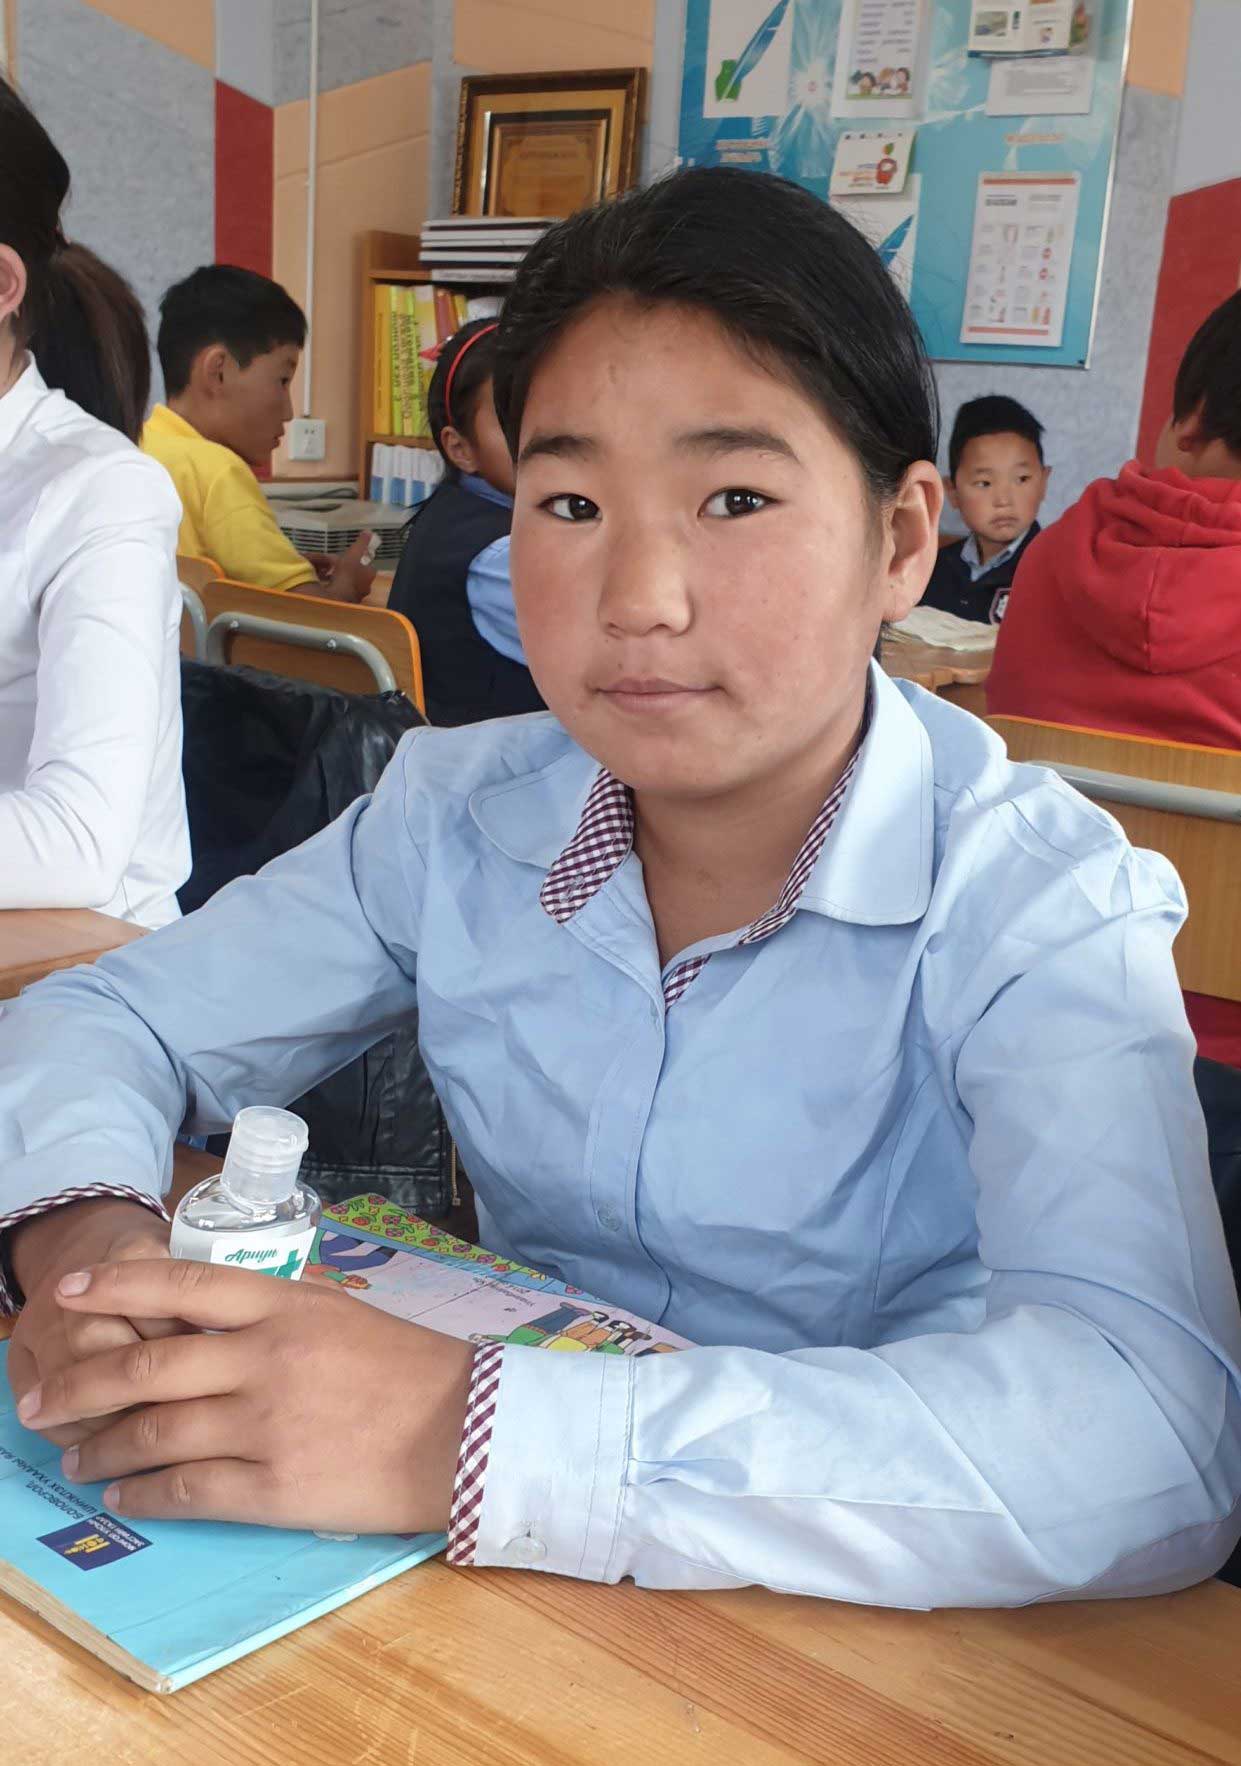 Mongolia girl in school